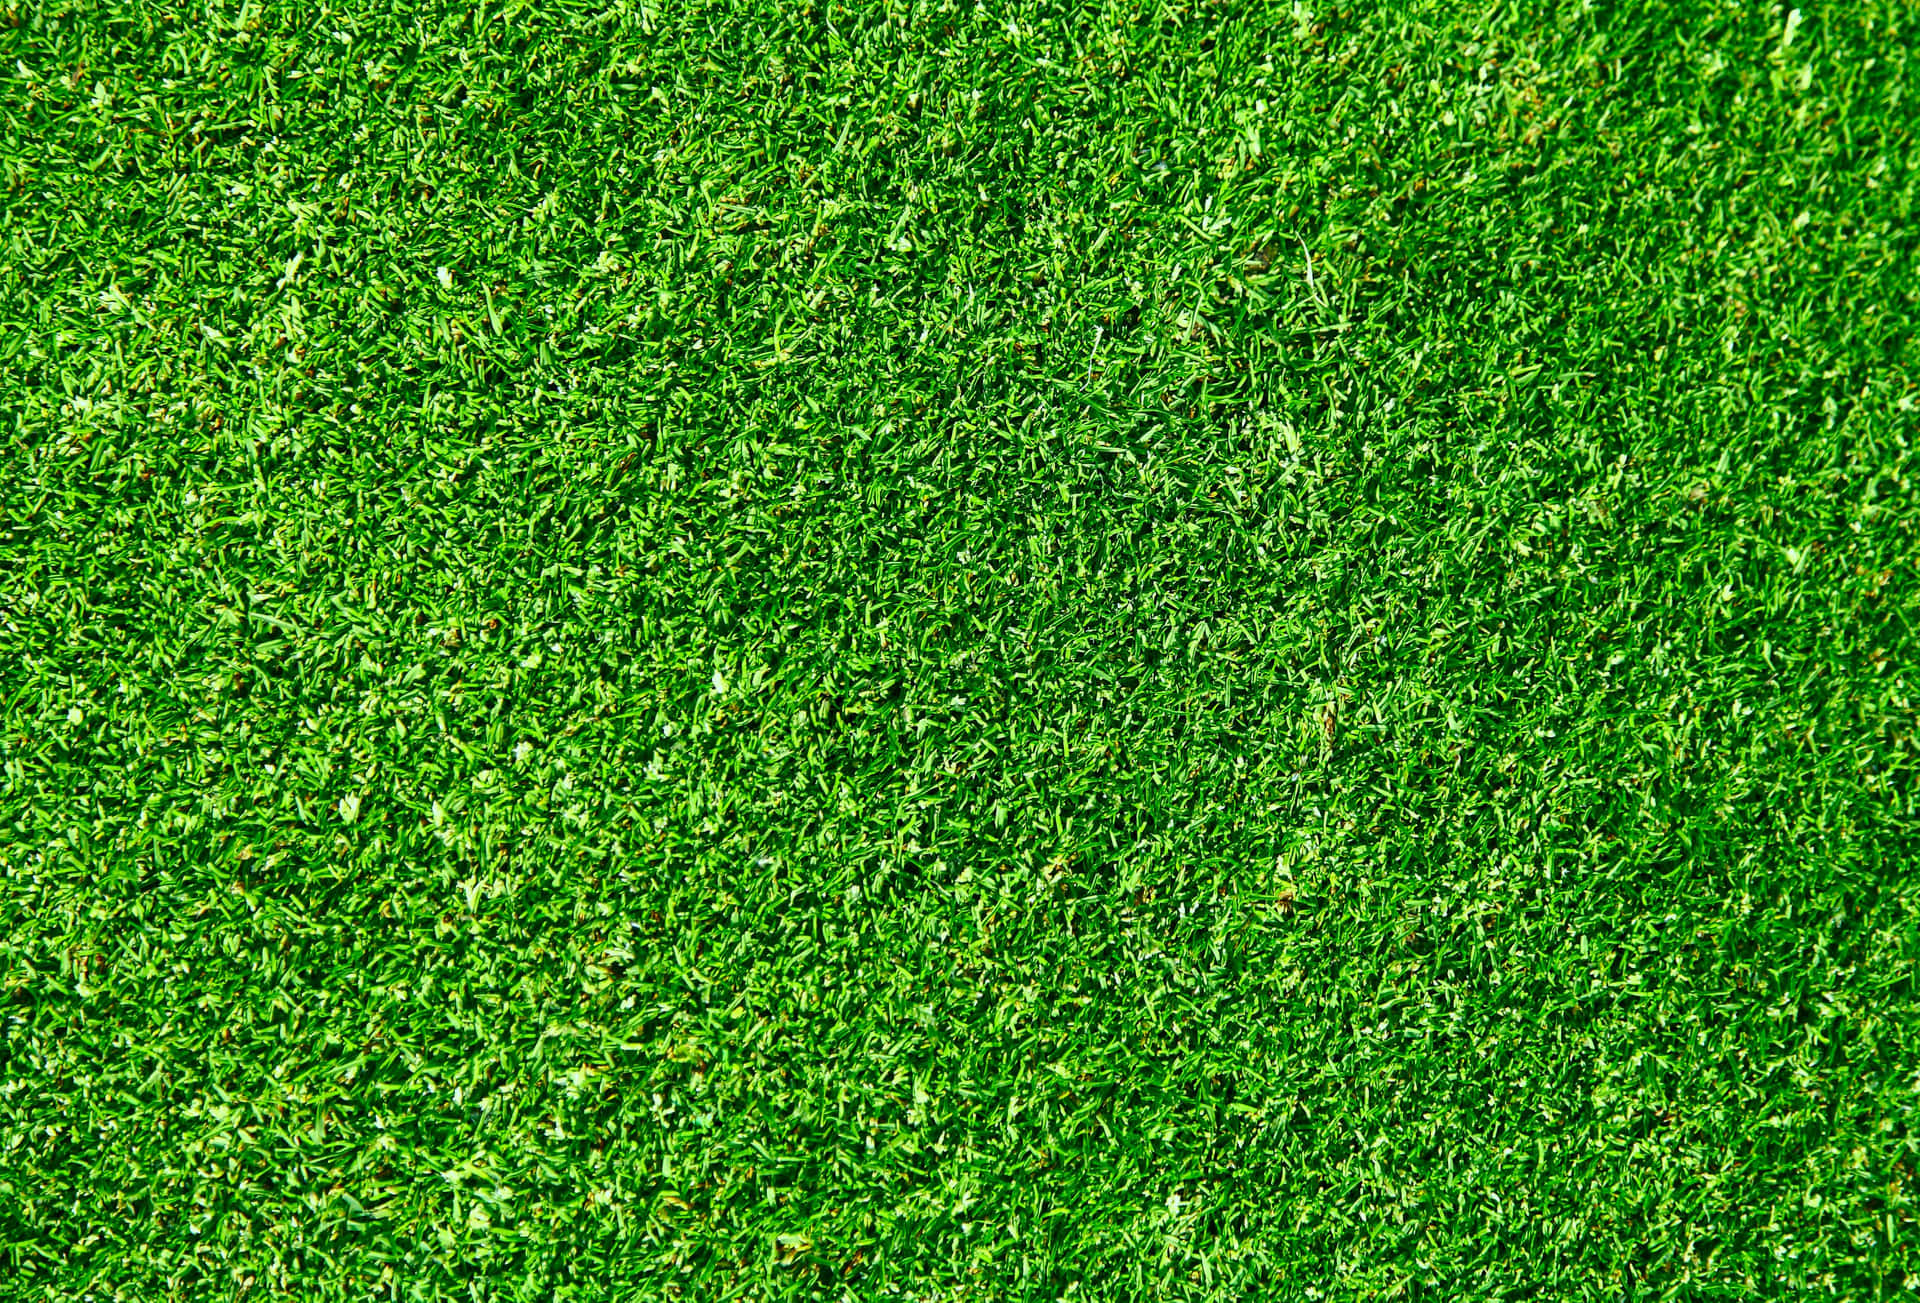 100+] Green Grass Background s 